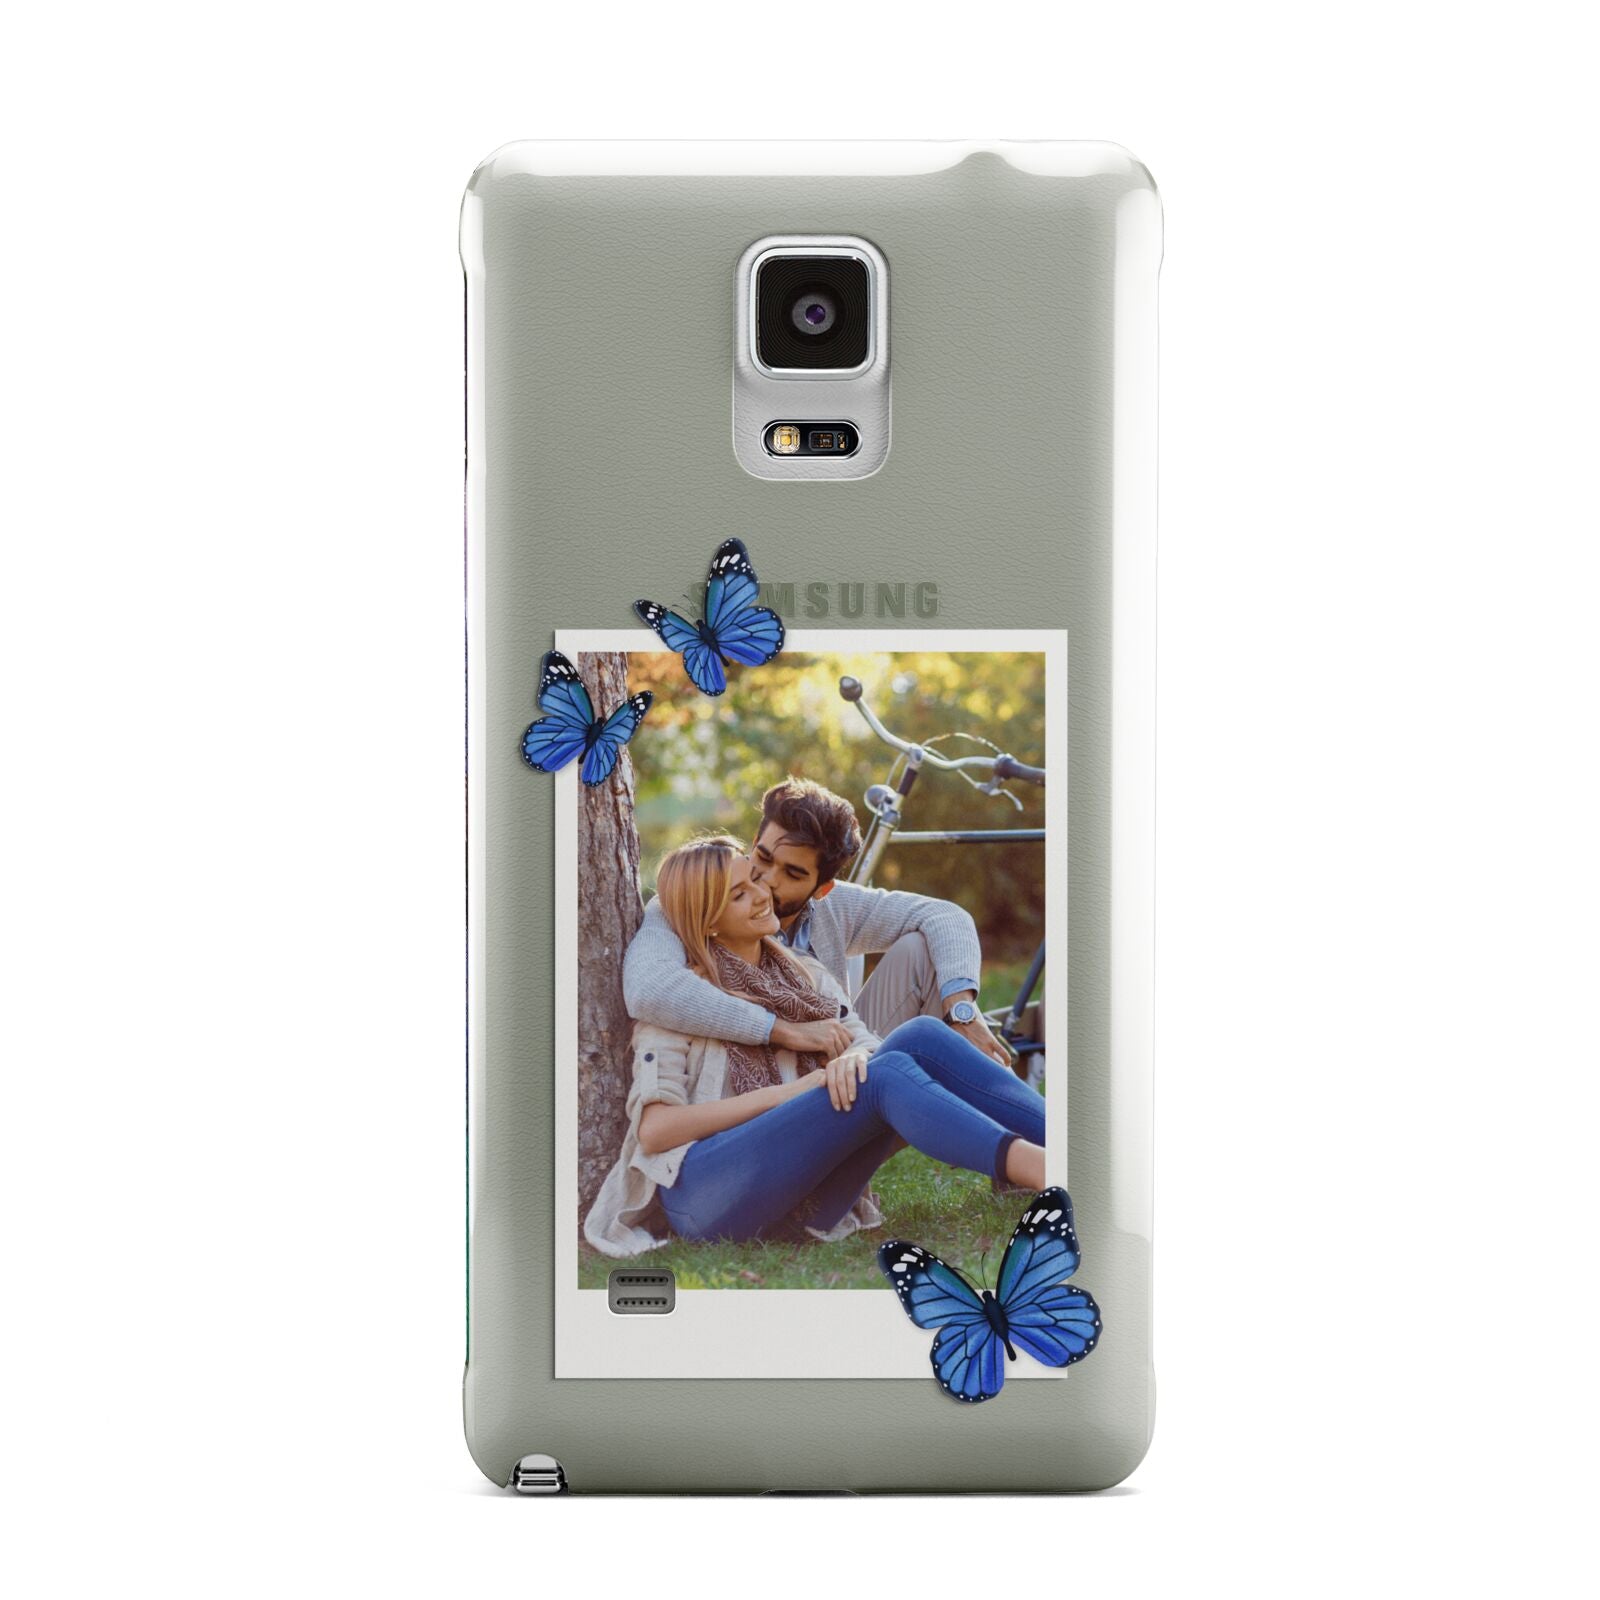 Polaroid Photo Samsung Galaxy Note 4 Case